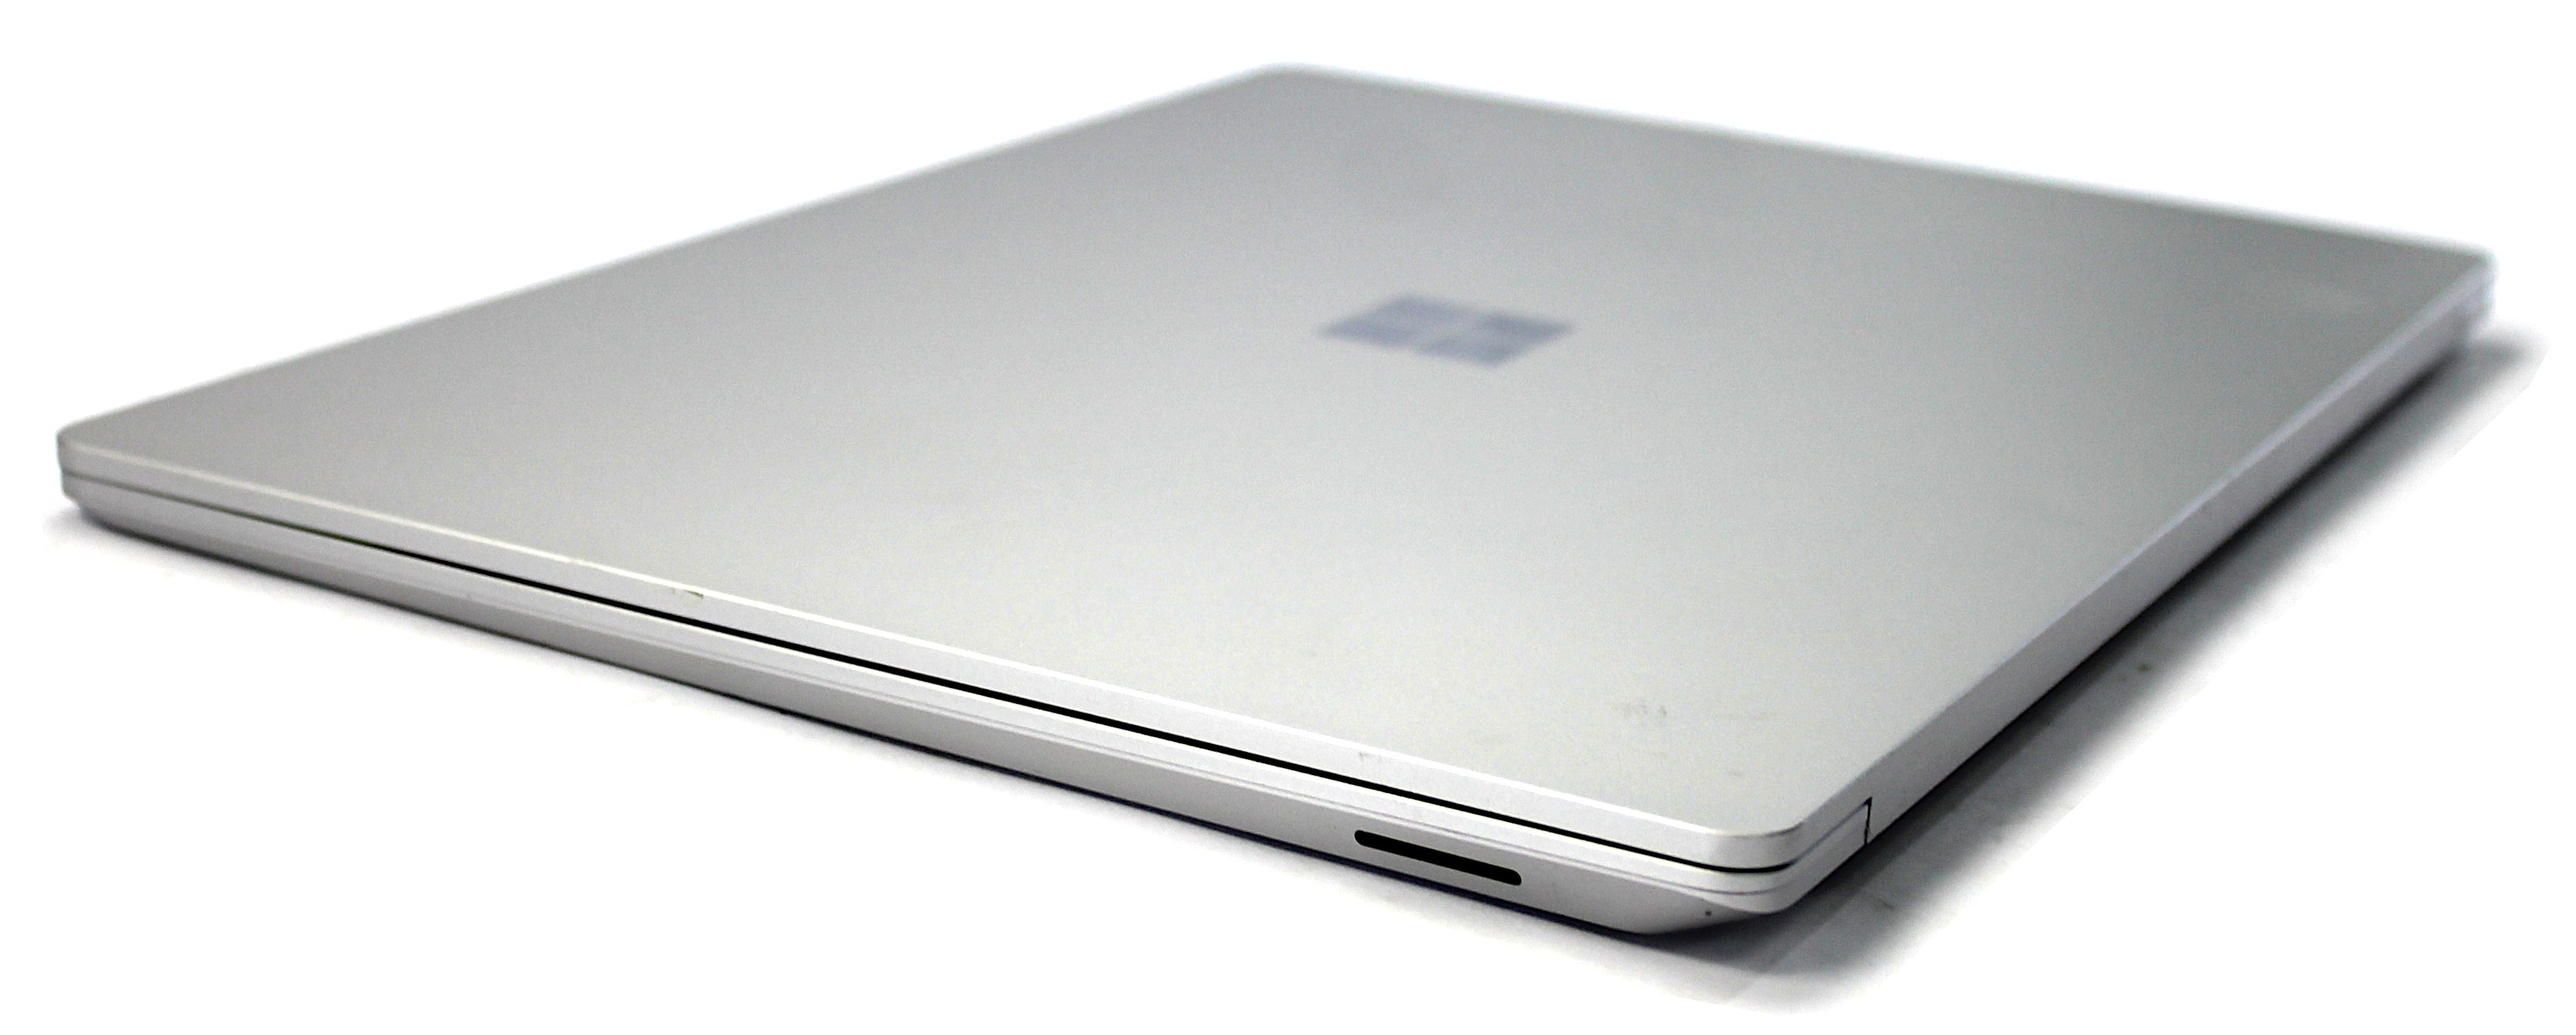 Microsoft Surface Laptop 4, 15" AMD Ryzen 7, 8GB RAM, 256GB SSD